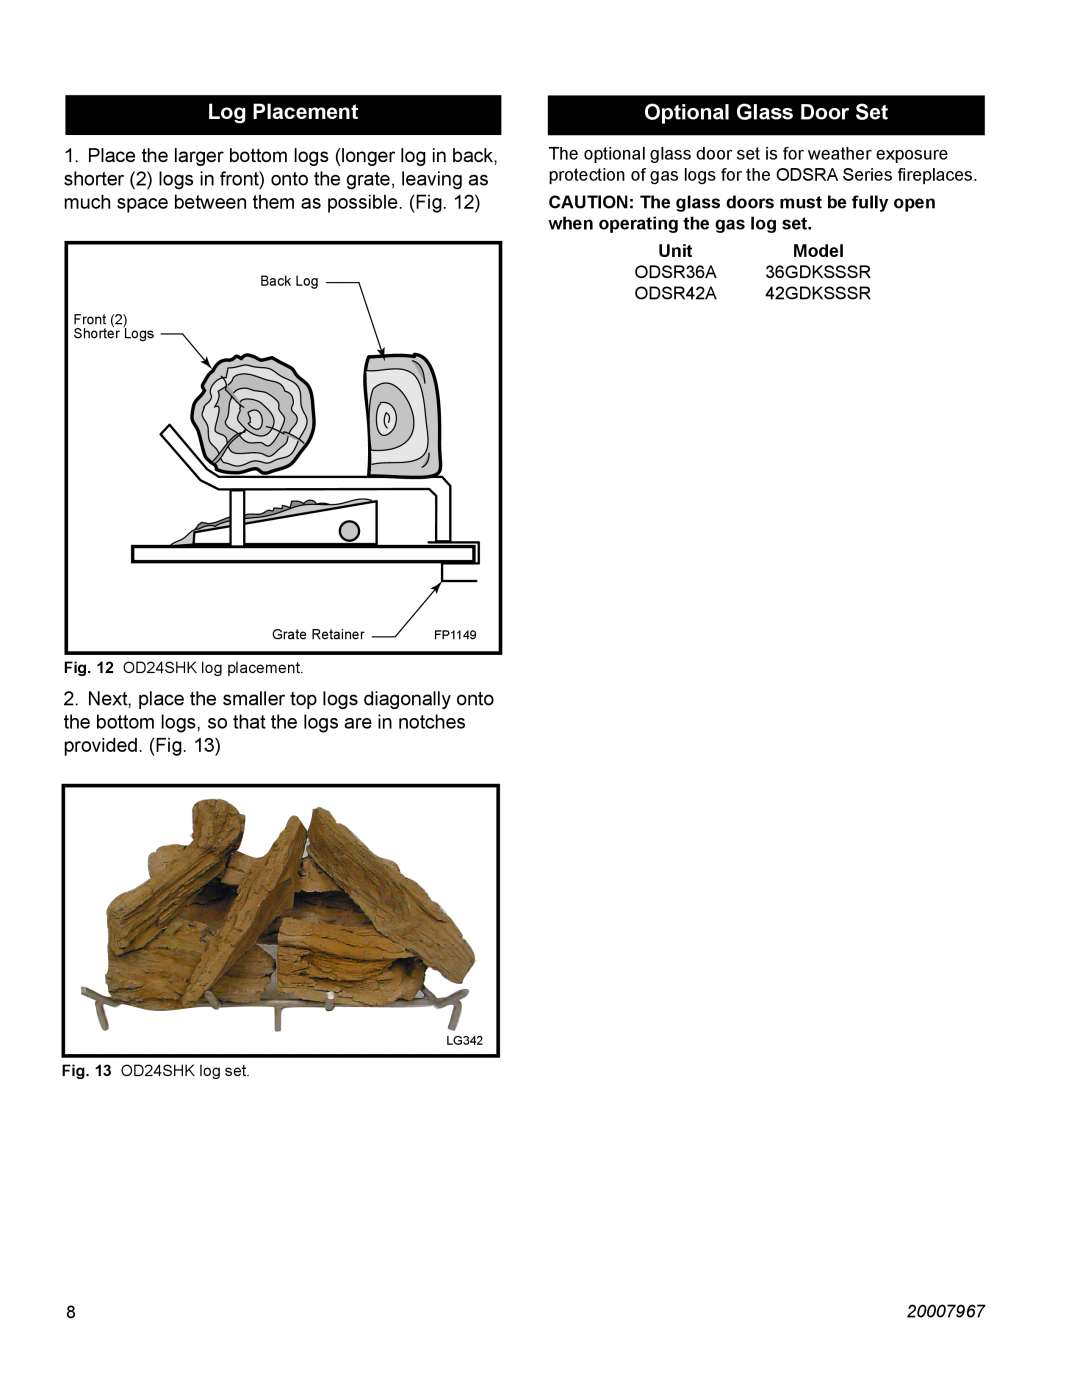 Vermont Casting OD24SHKN manual Log Placement, Optional Glass Door Set, UnitModel 